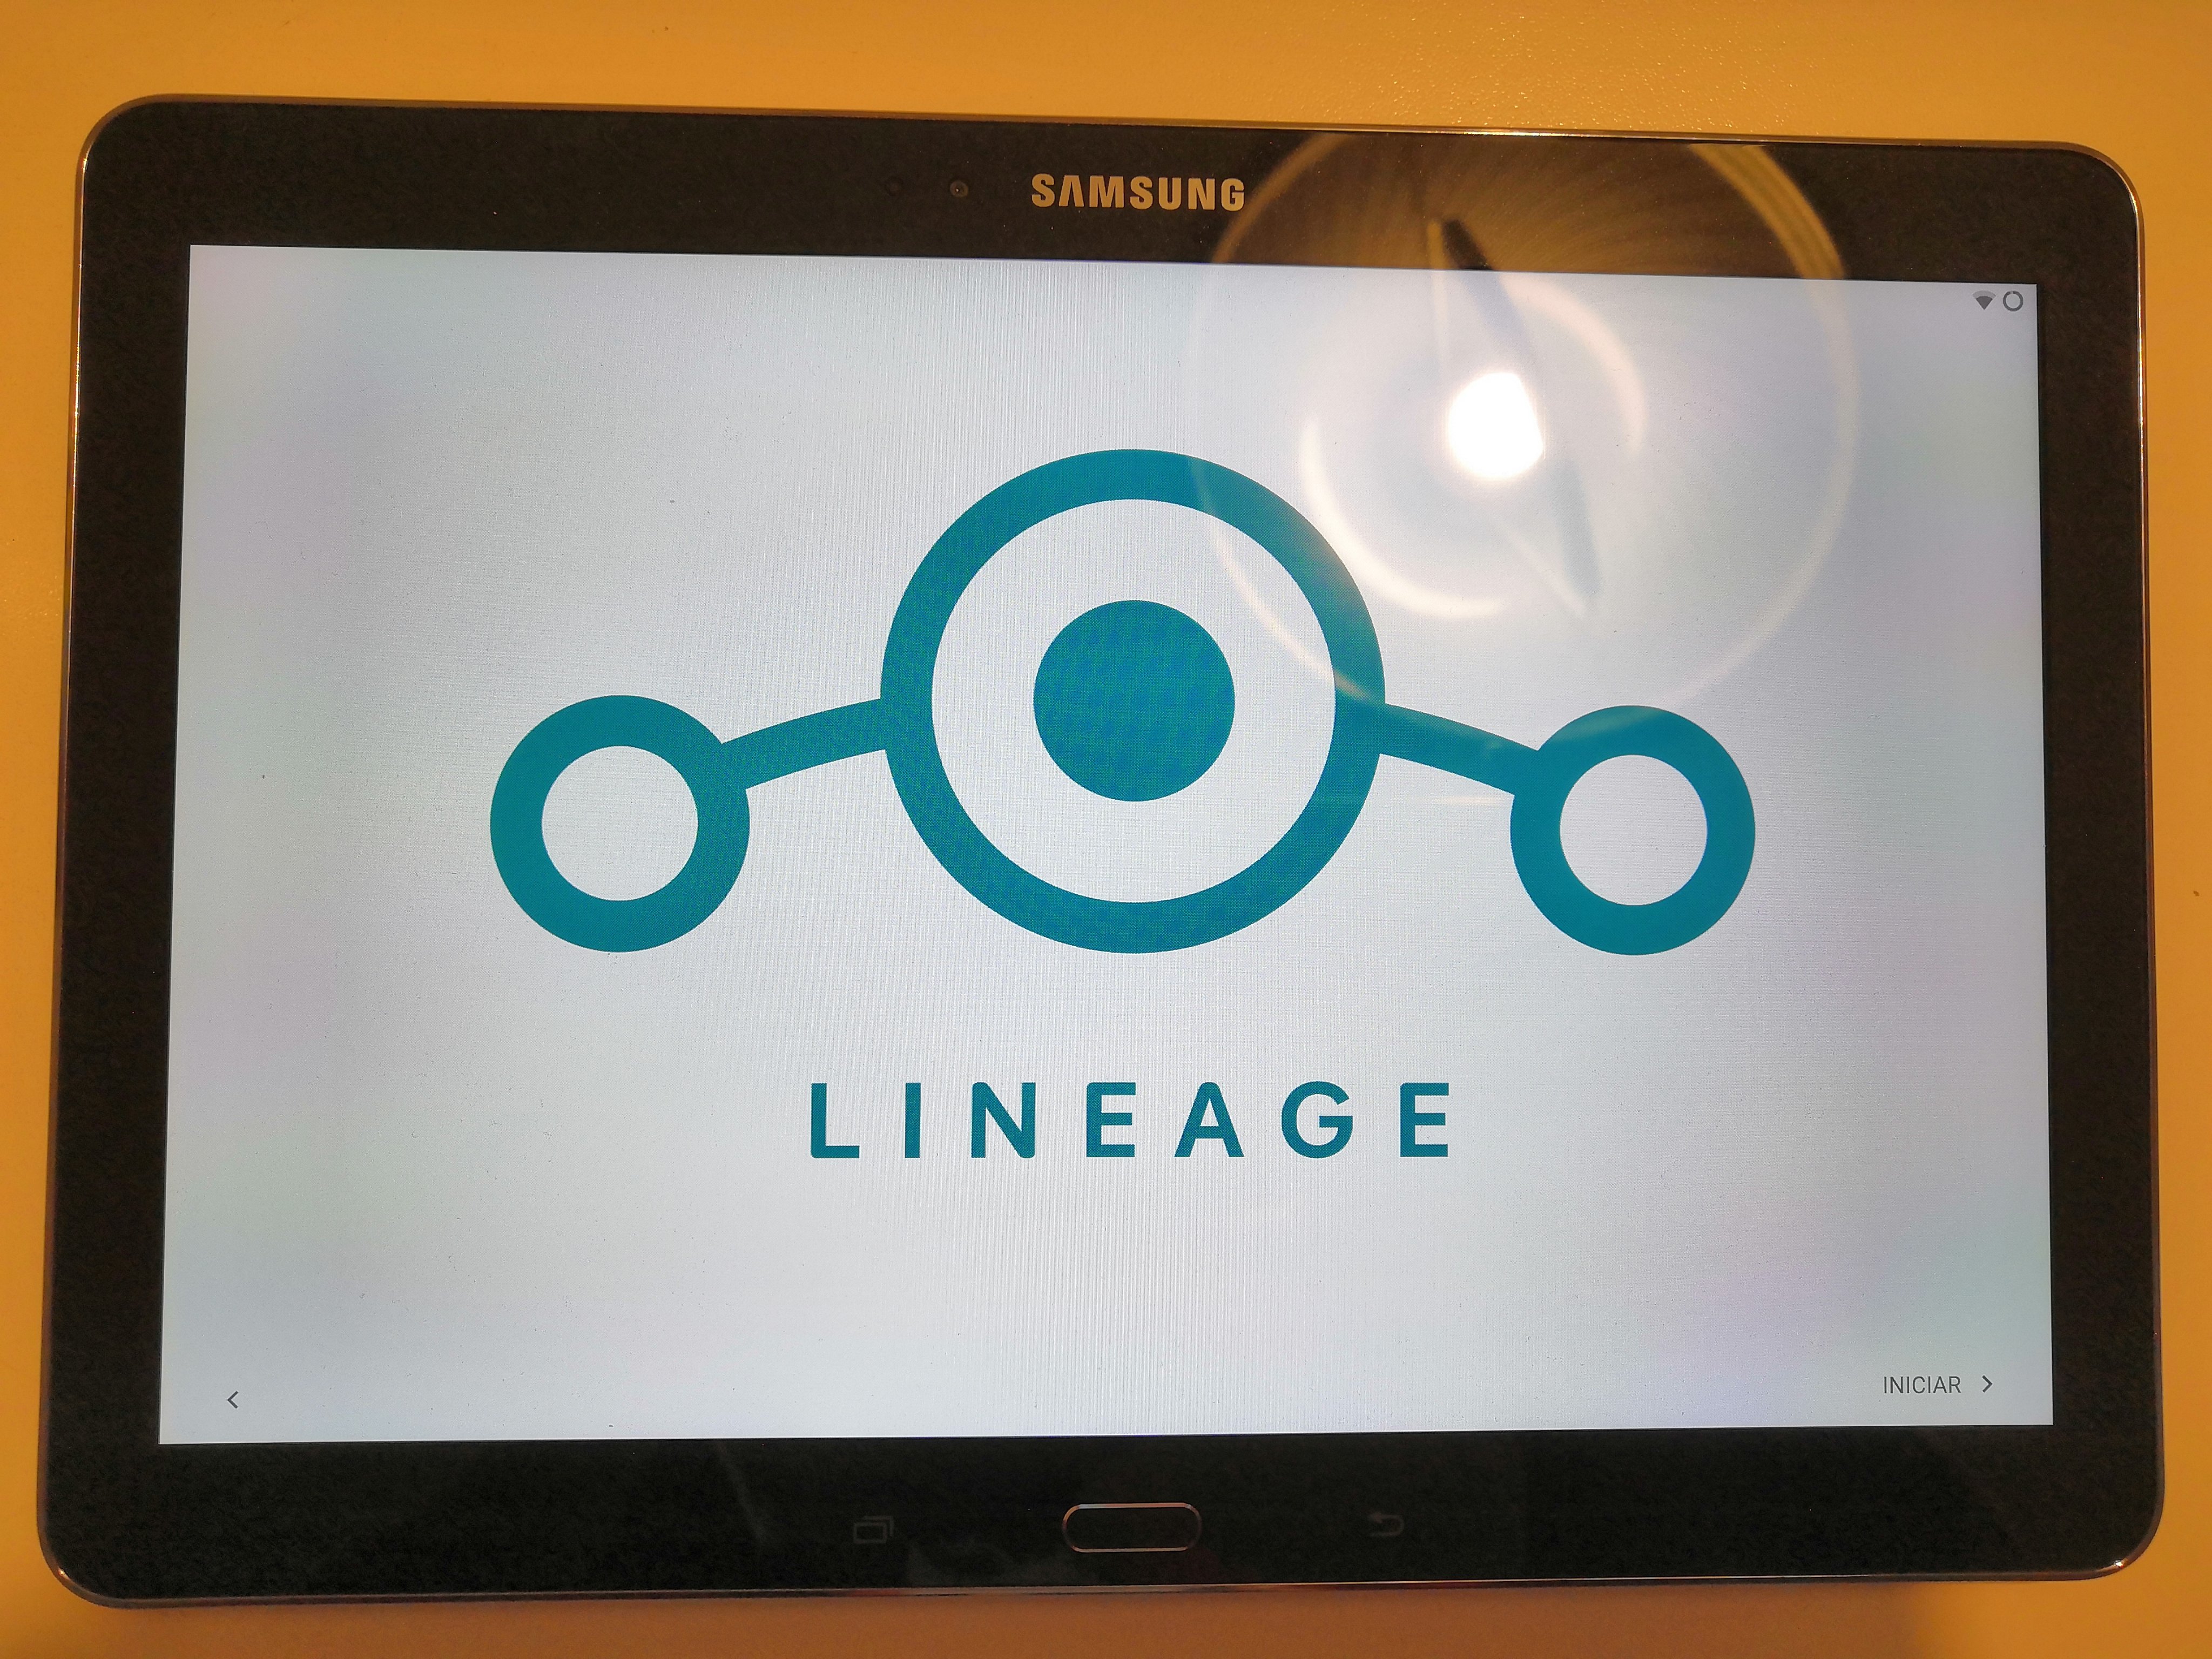 LineageOS start screen